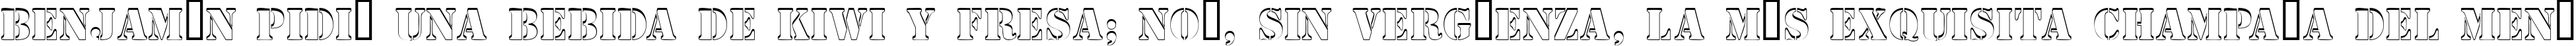 Пример написания шрифтом a_StamperSh текста на испанском